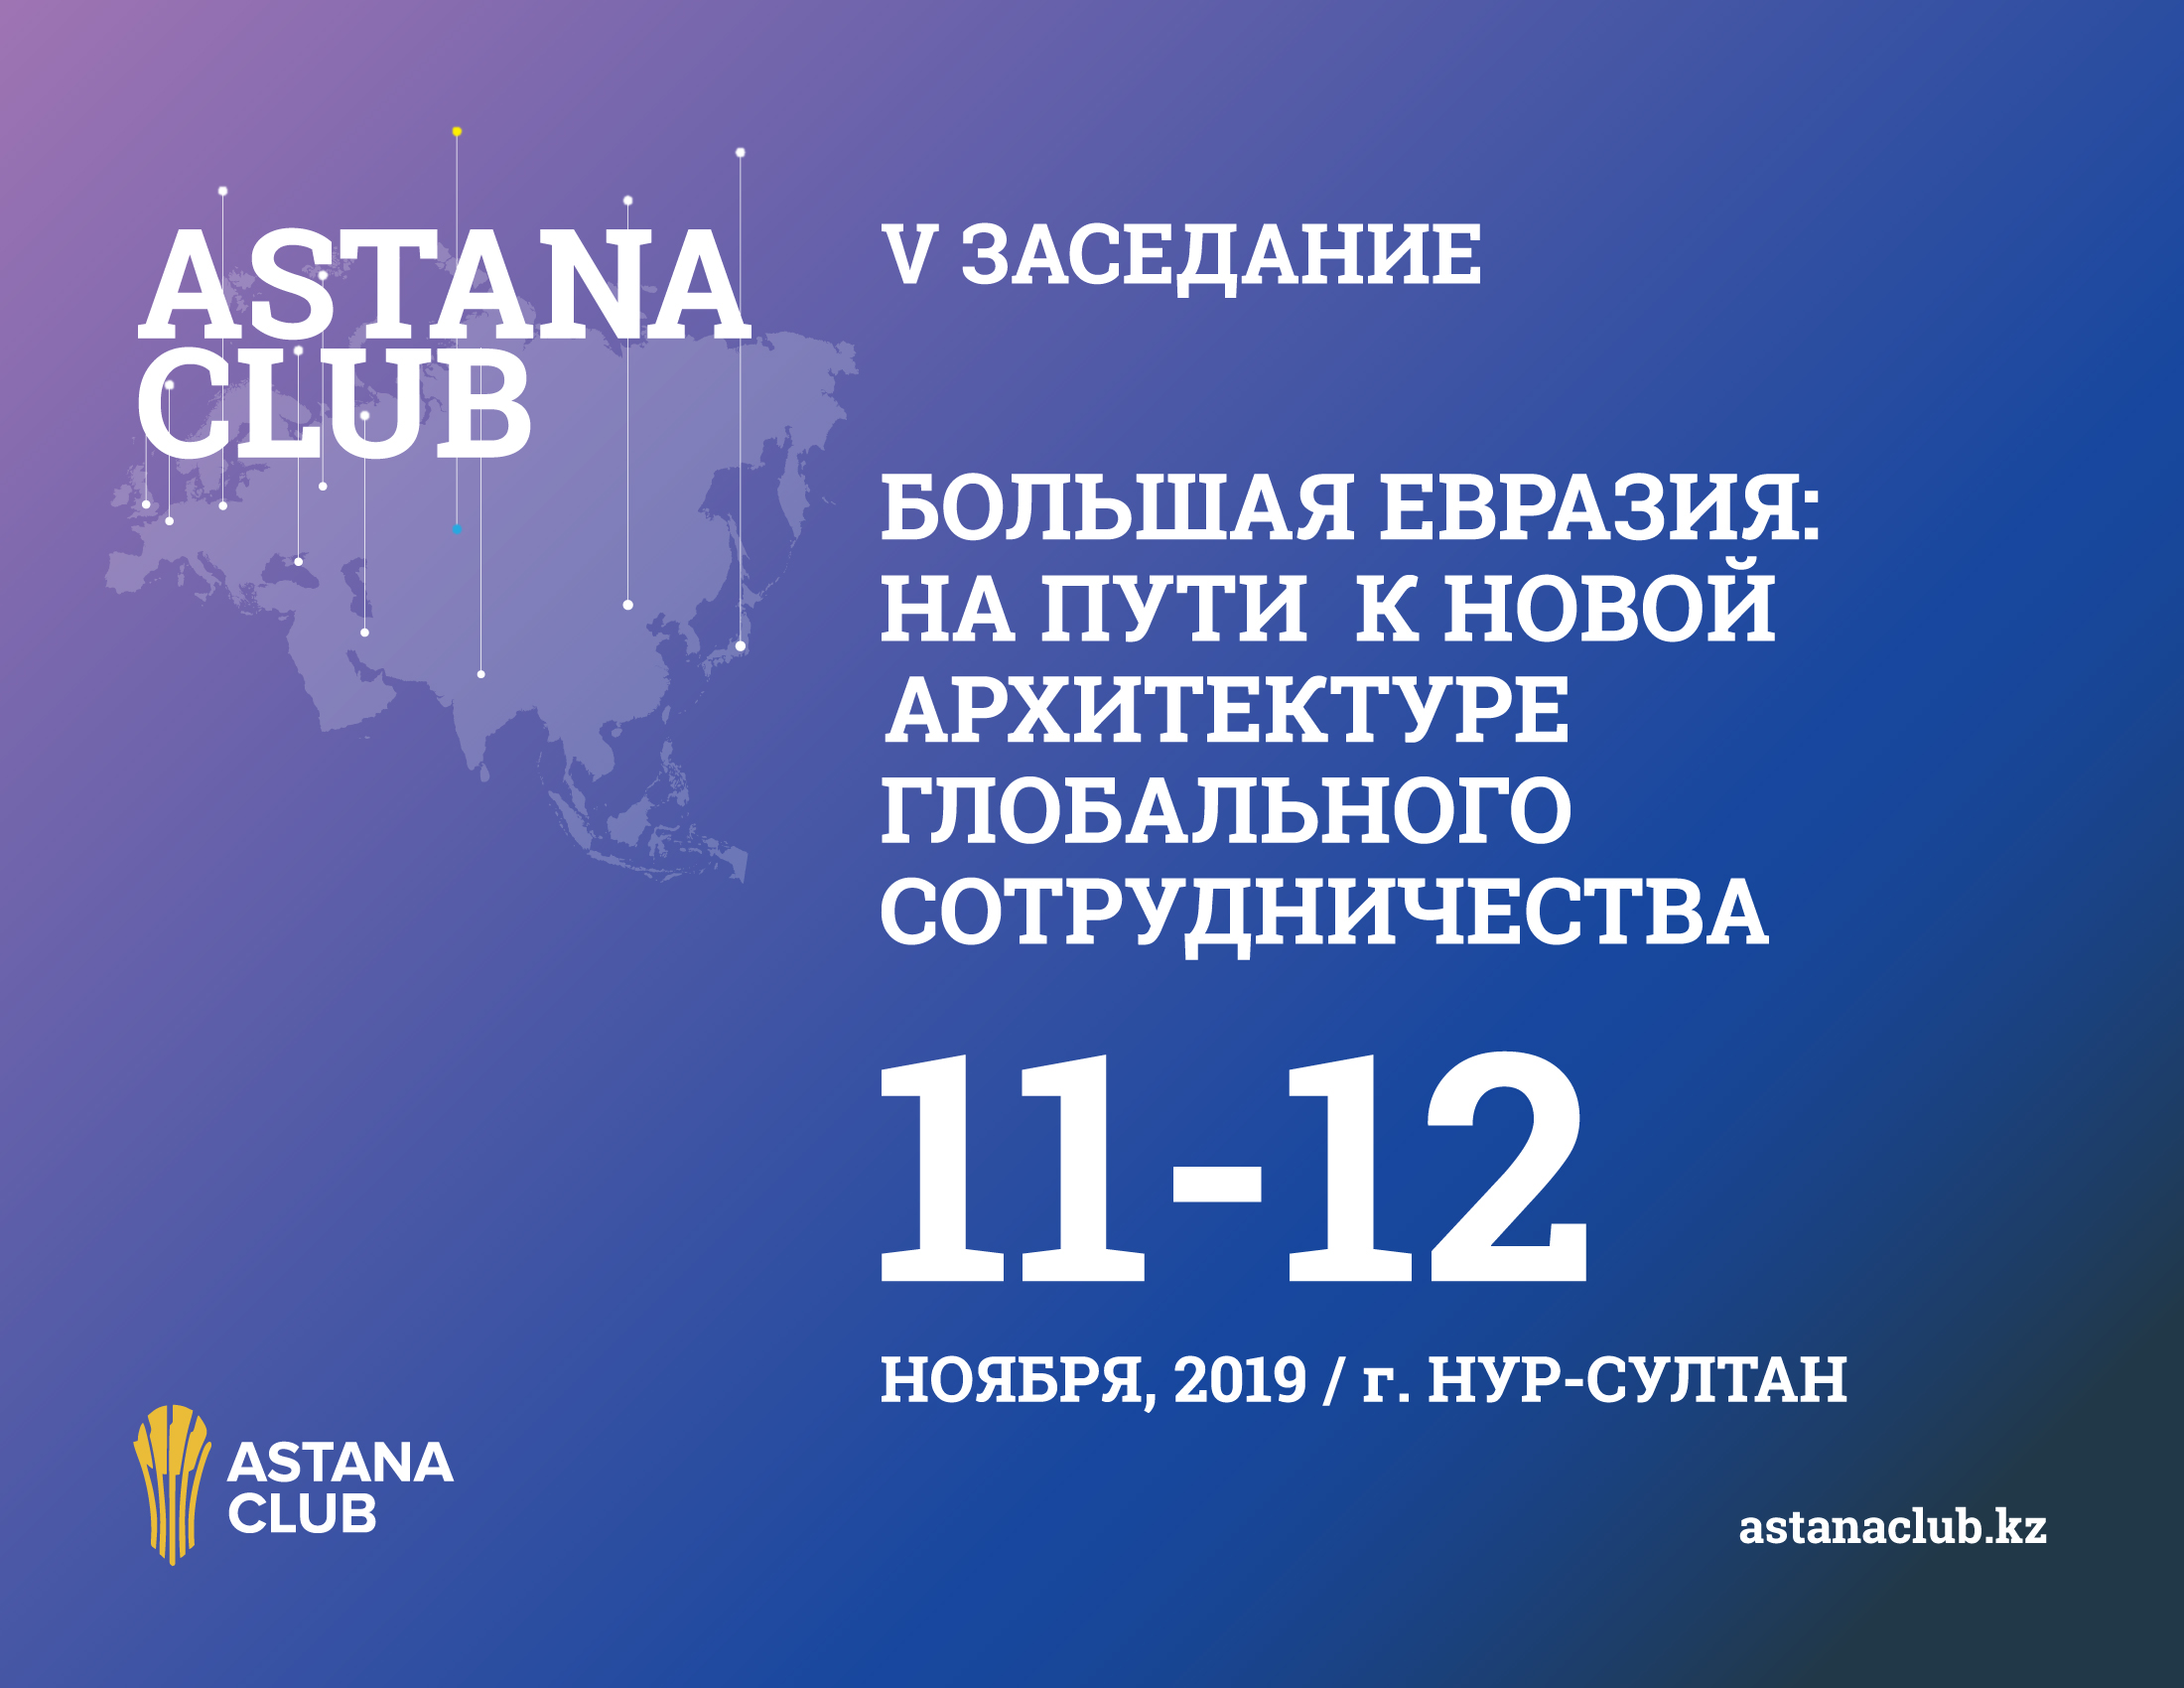 Объявлена программа пятого заседания Astana Club 2019